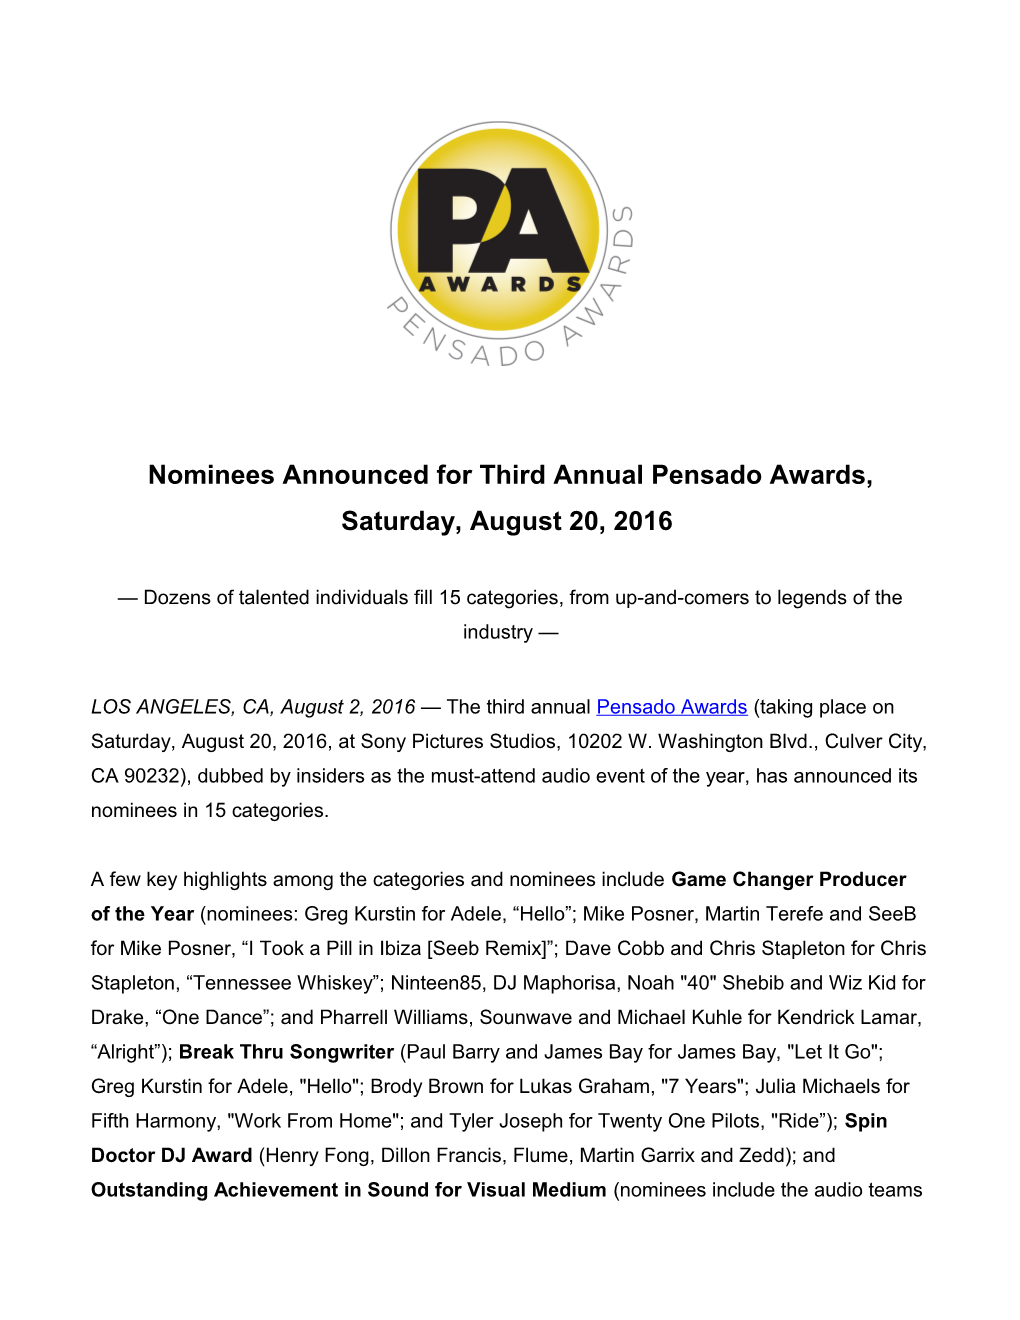 Nominees Announced Forthird Annual Pensado Awards, Saturday, August 20, 2016